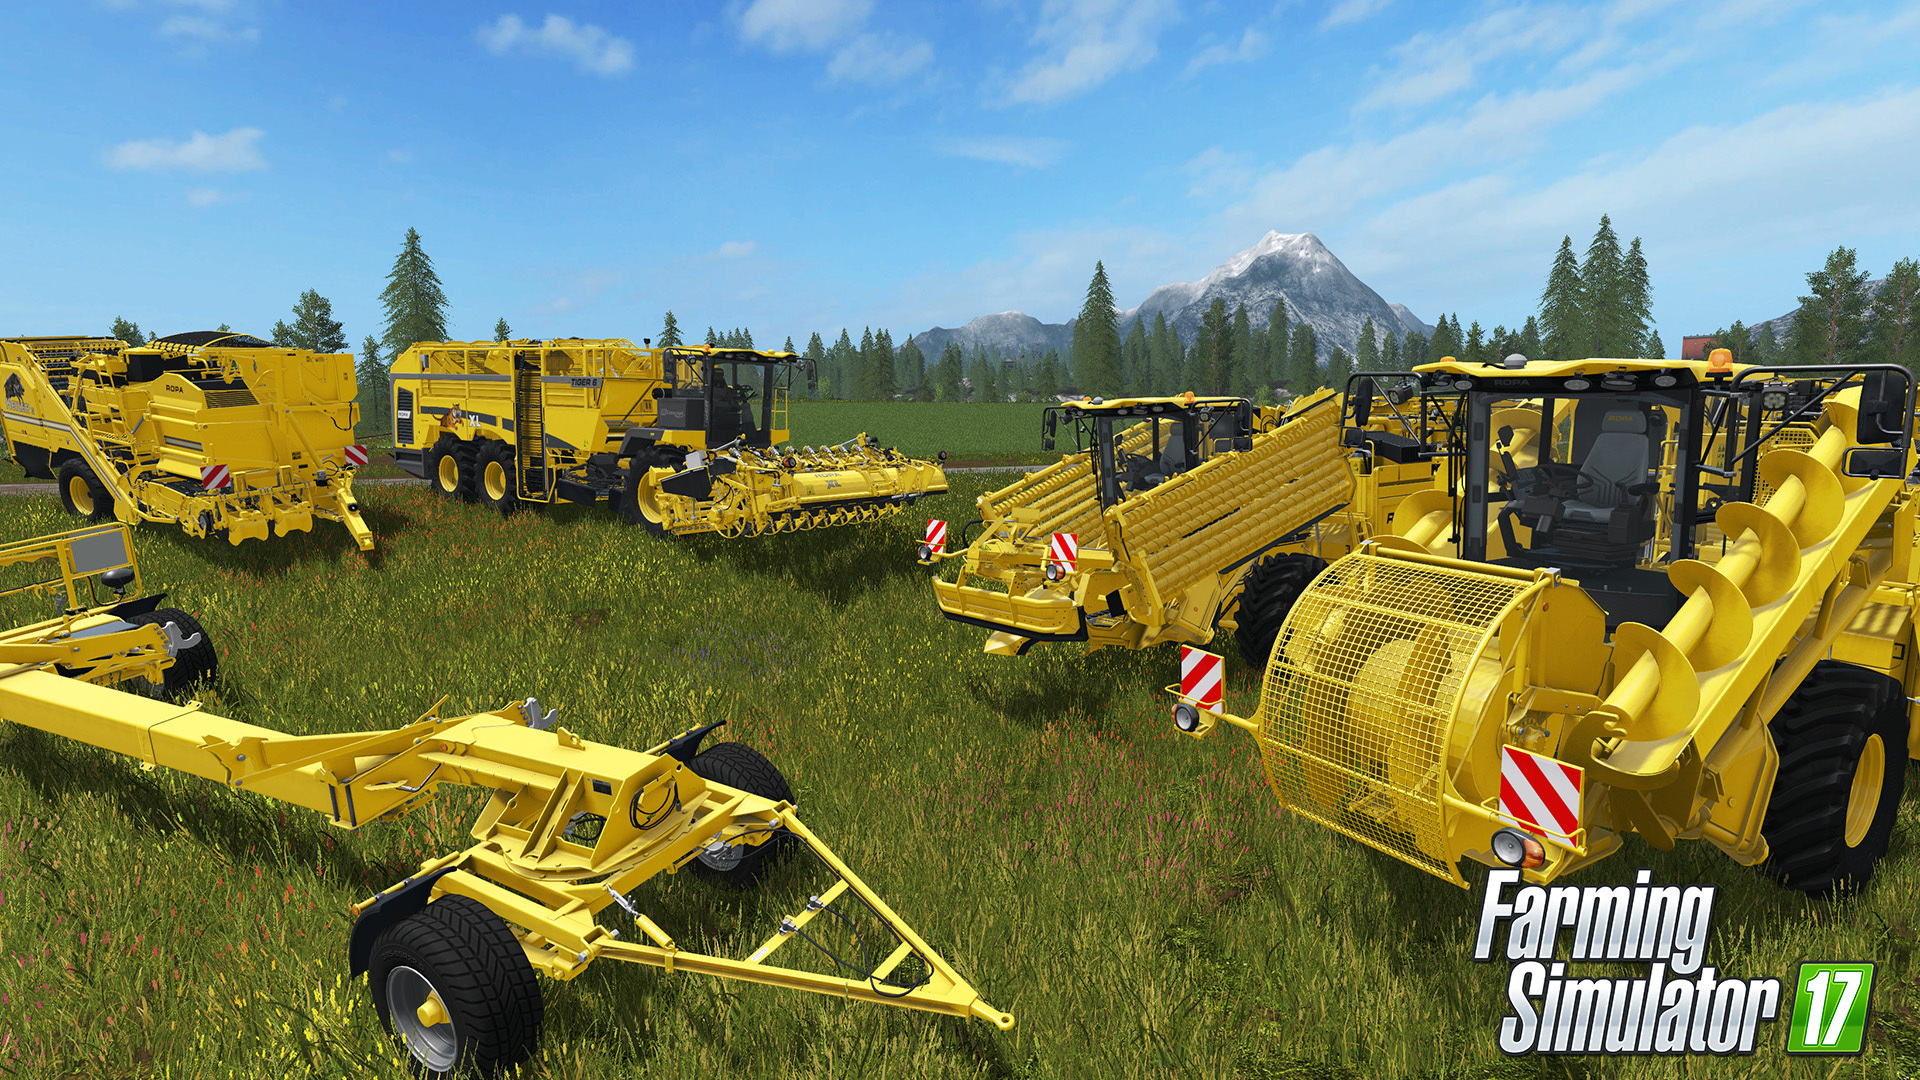 Save 60% on Farming Simulator 17 on Steam